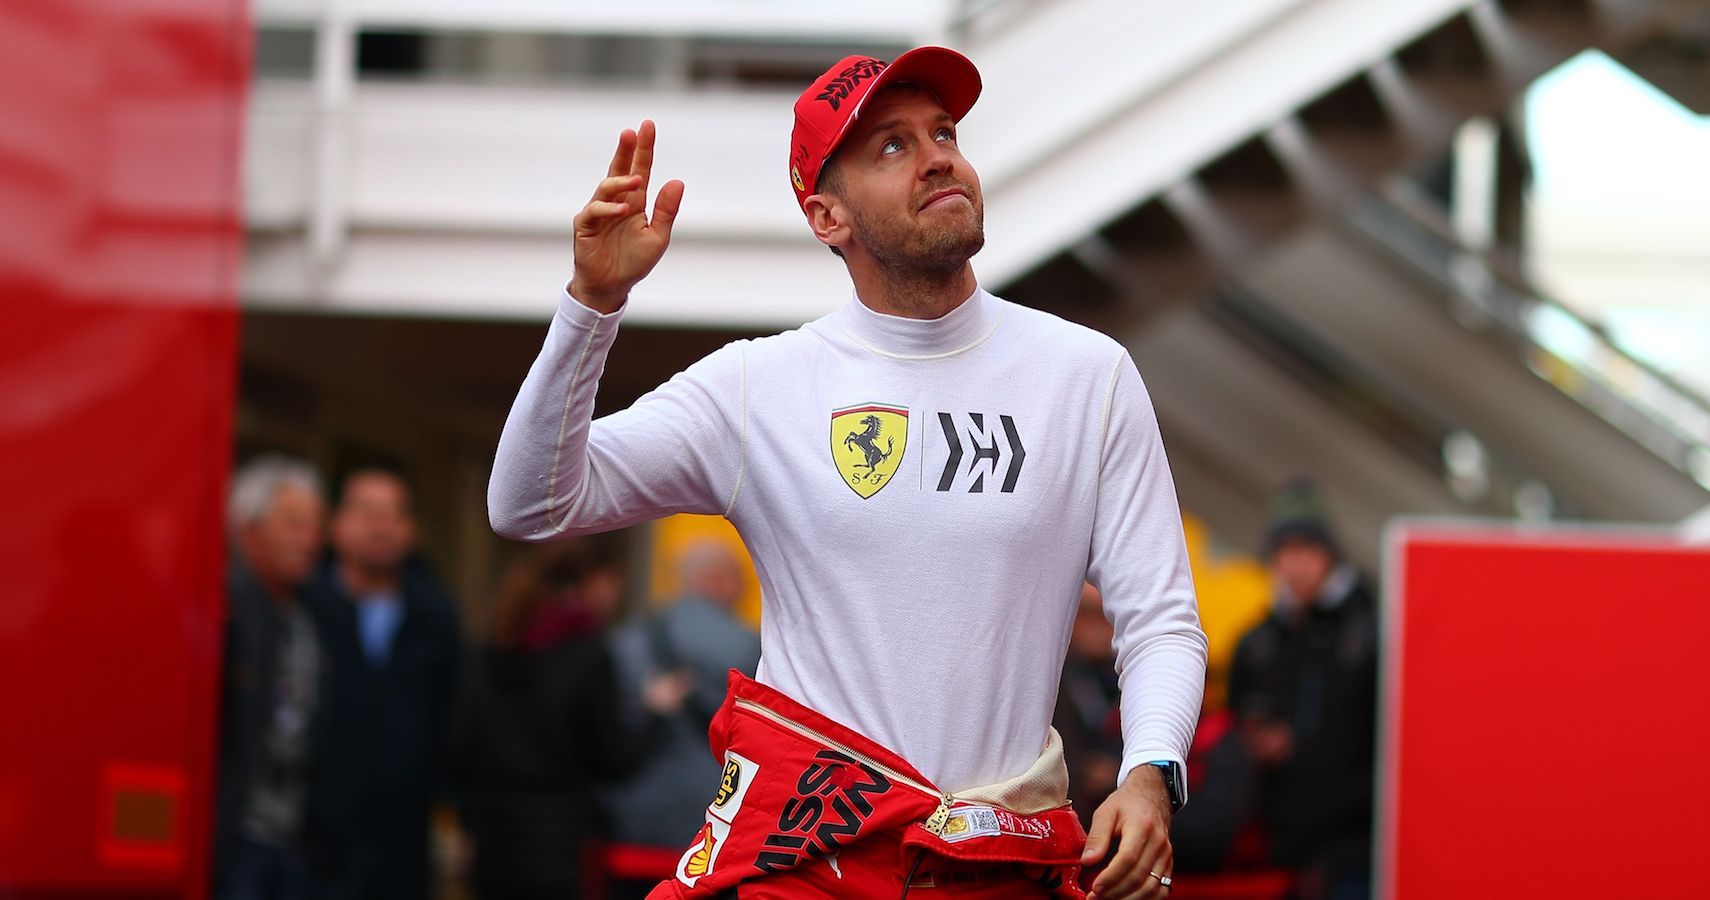 Sebastian Vettel waving